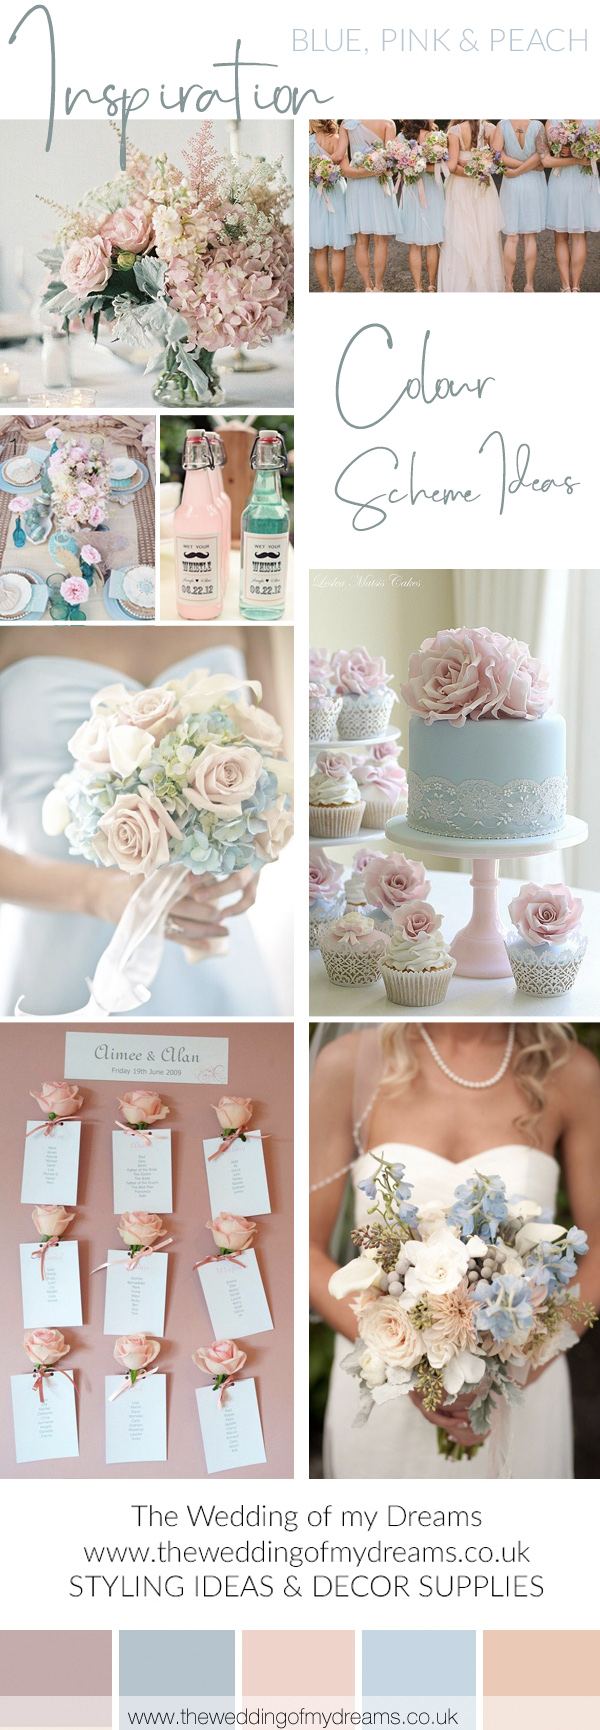 Blue pink and peach wedding colour scheme ideas